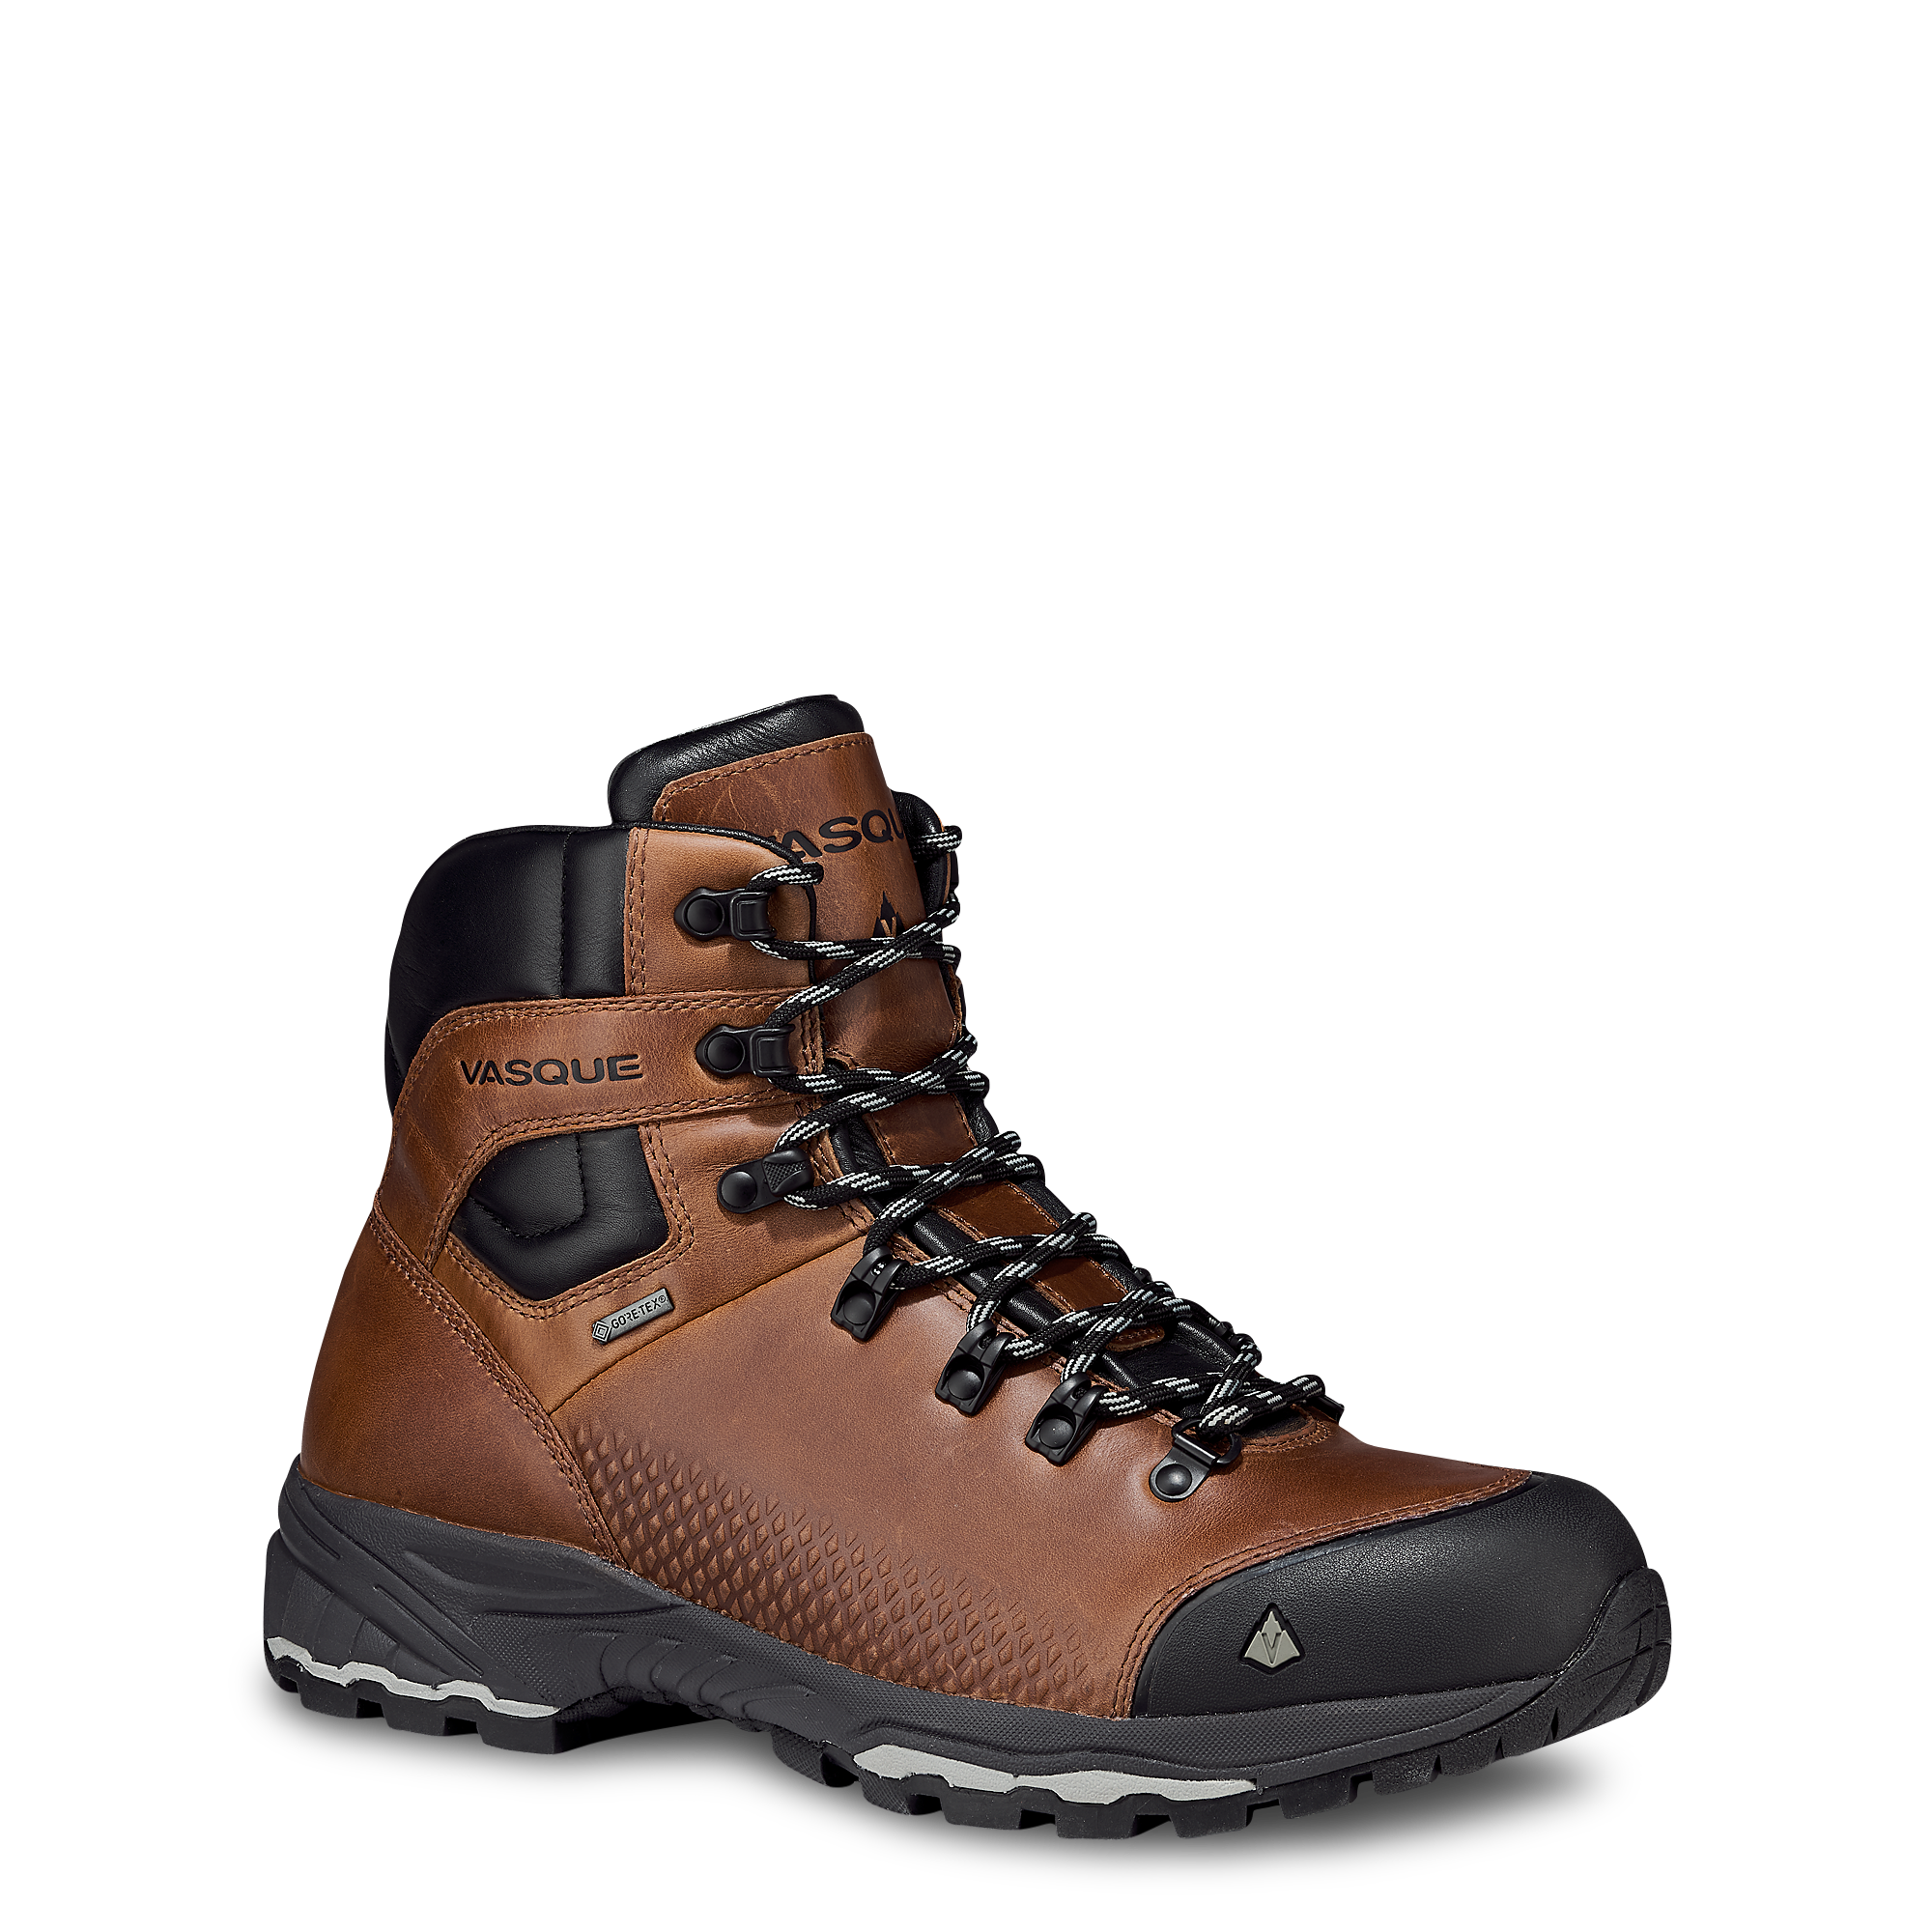 Vasque St. Elias FG GTX Waterproof Hiking Boots for Men